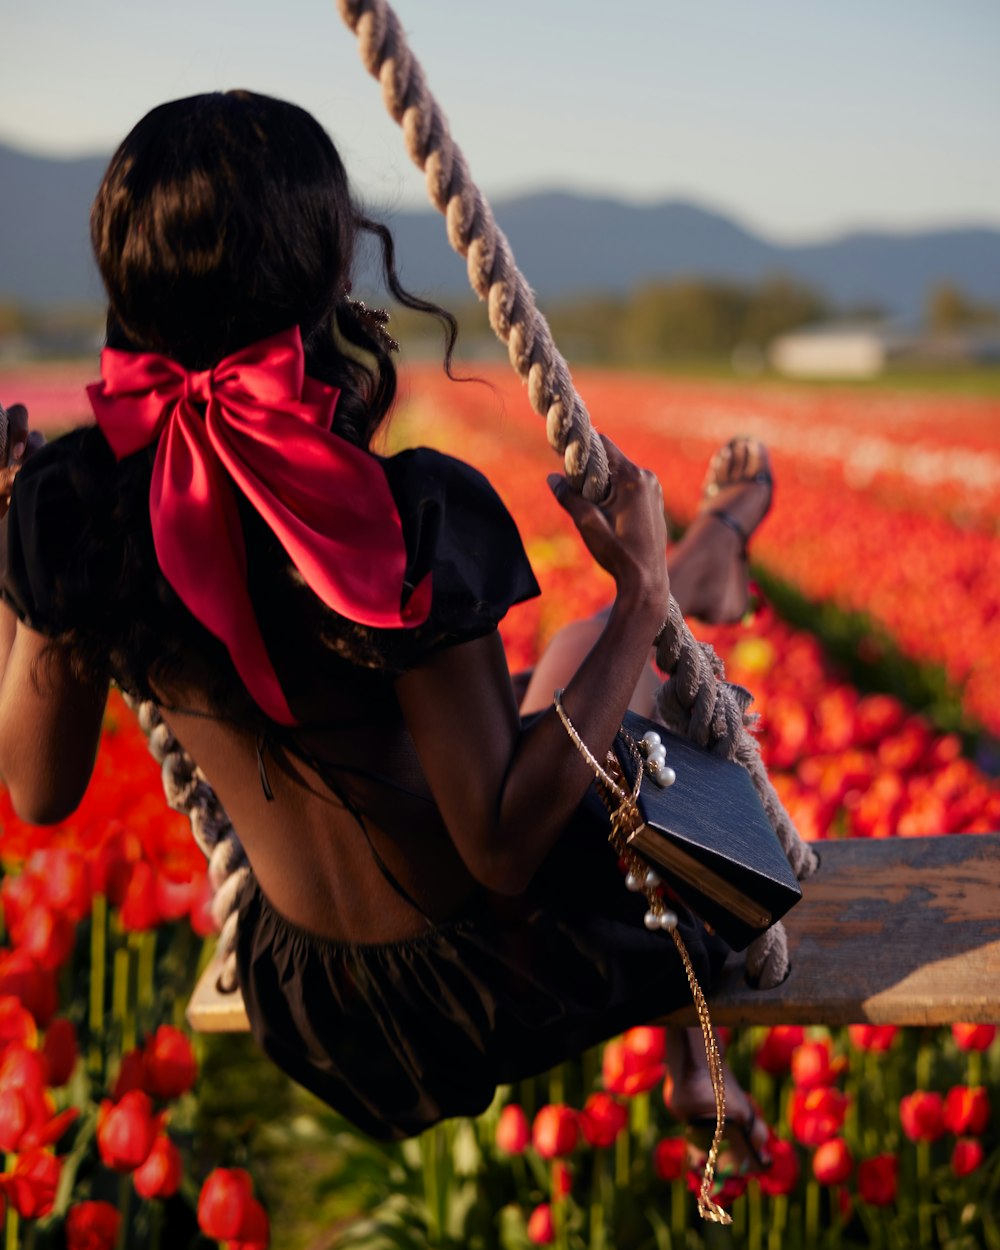 a woman sitting on a swing in a field of flowers